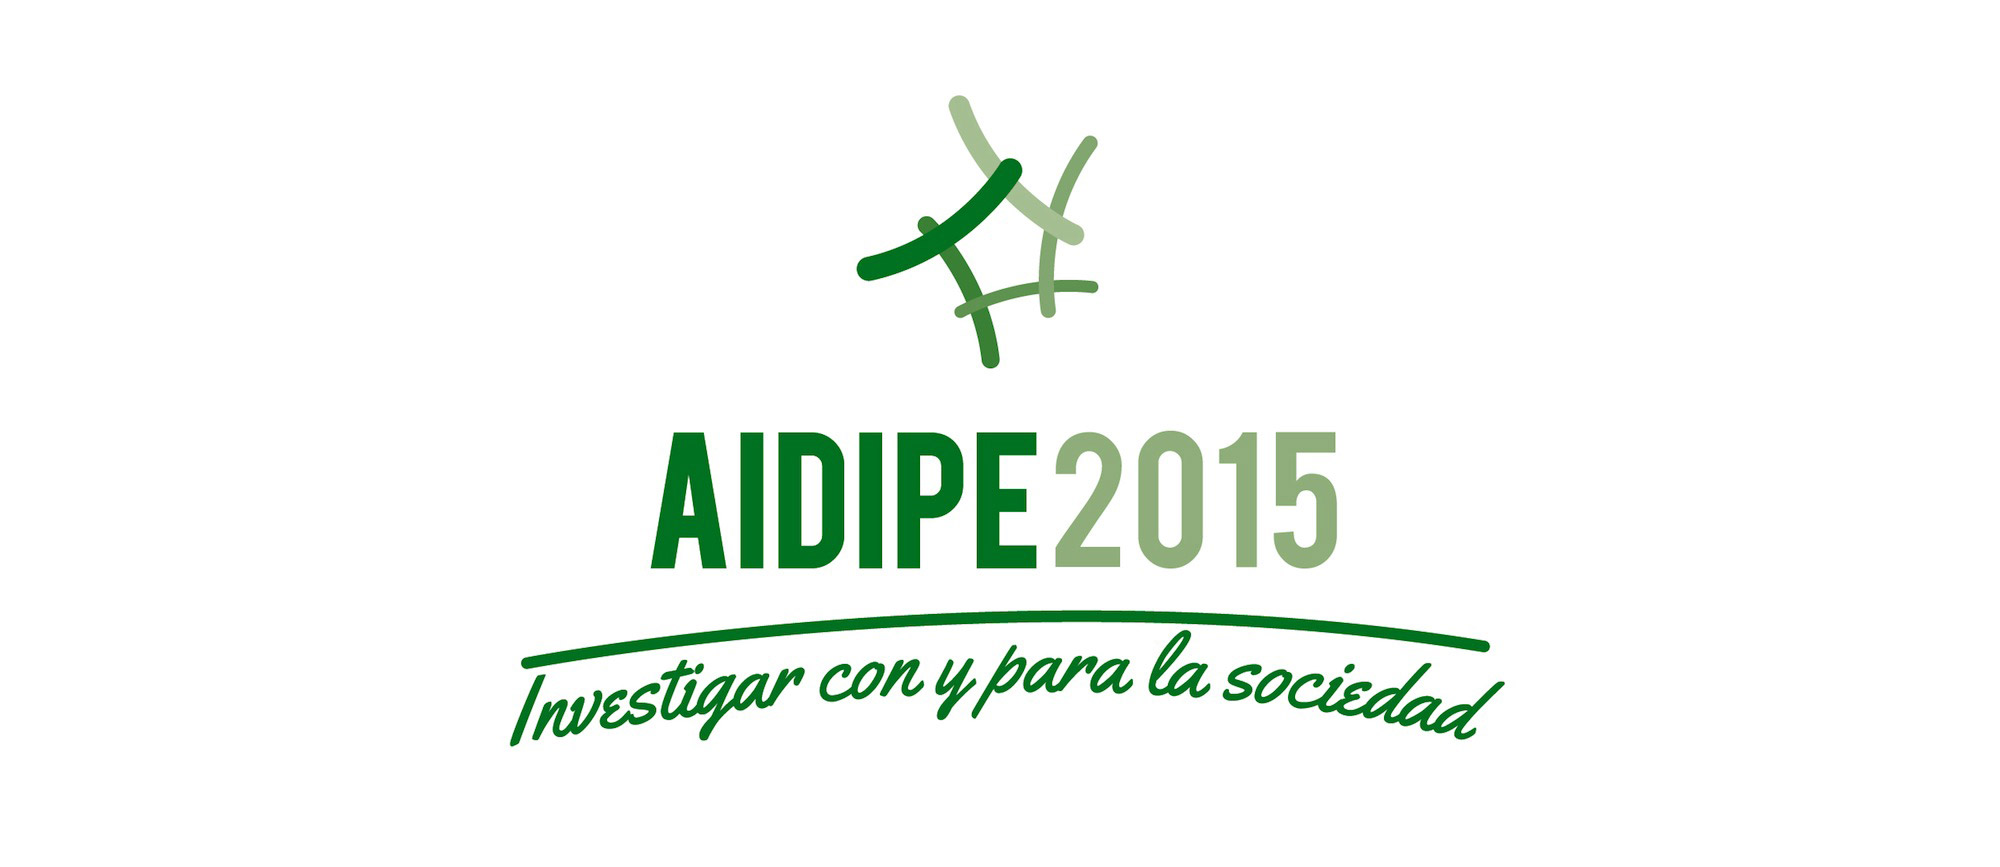 AIDIPE 2015 - Logotipo